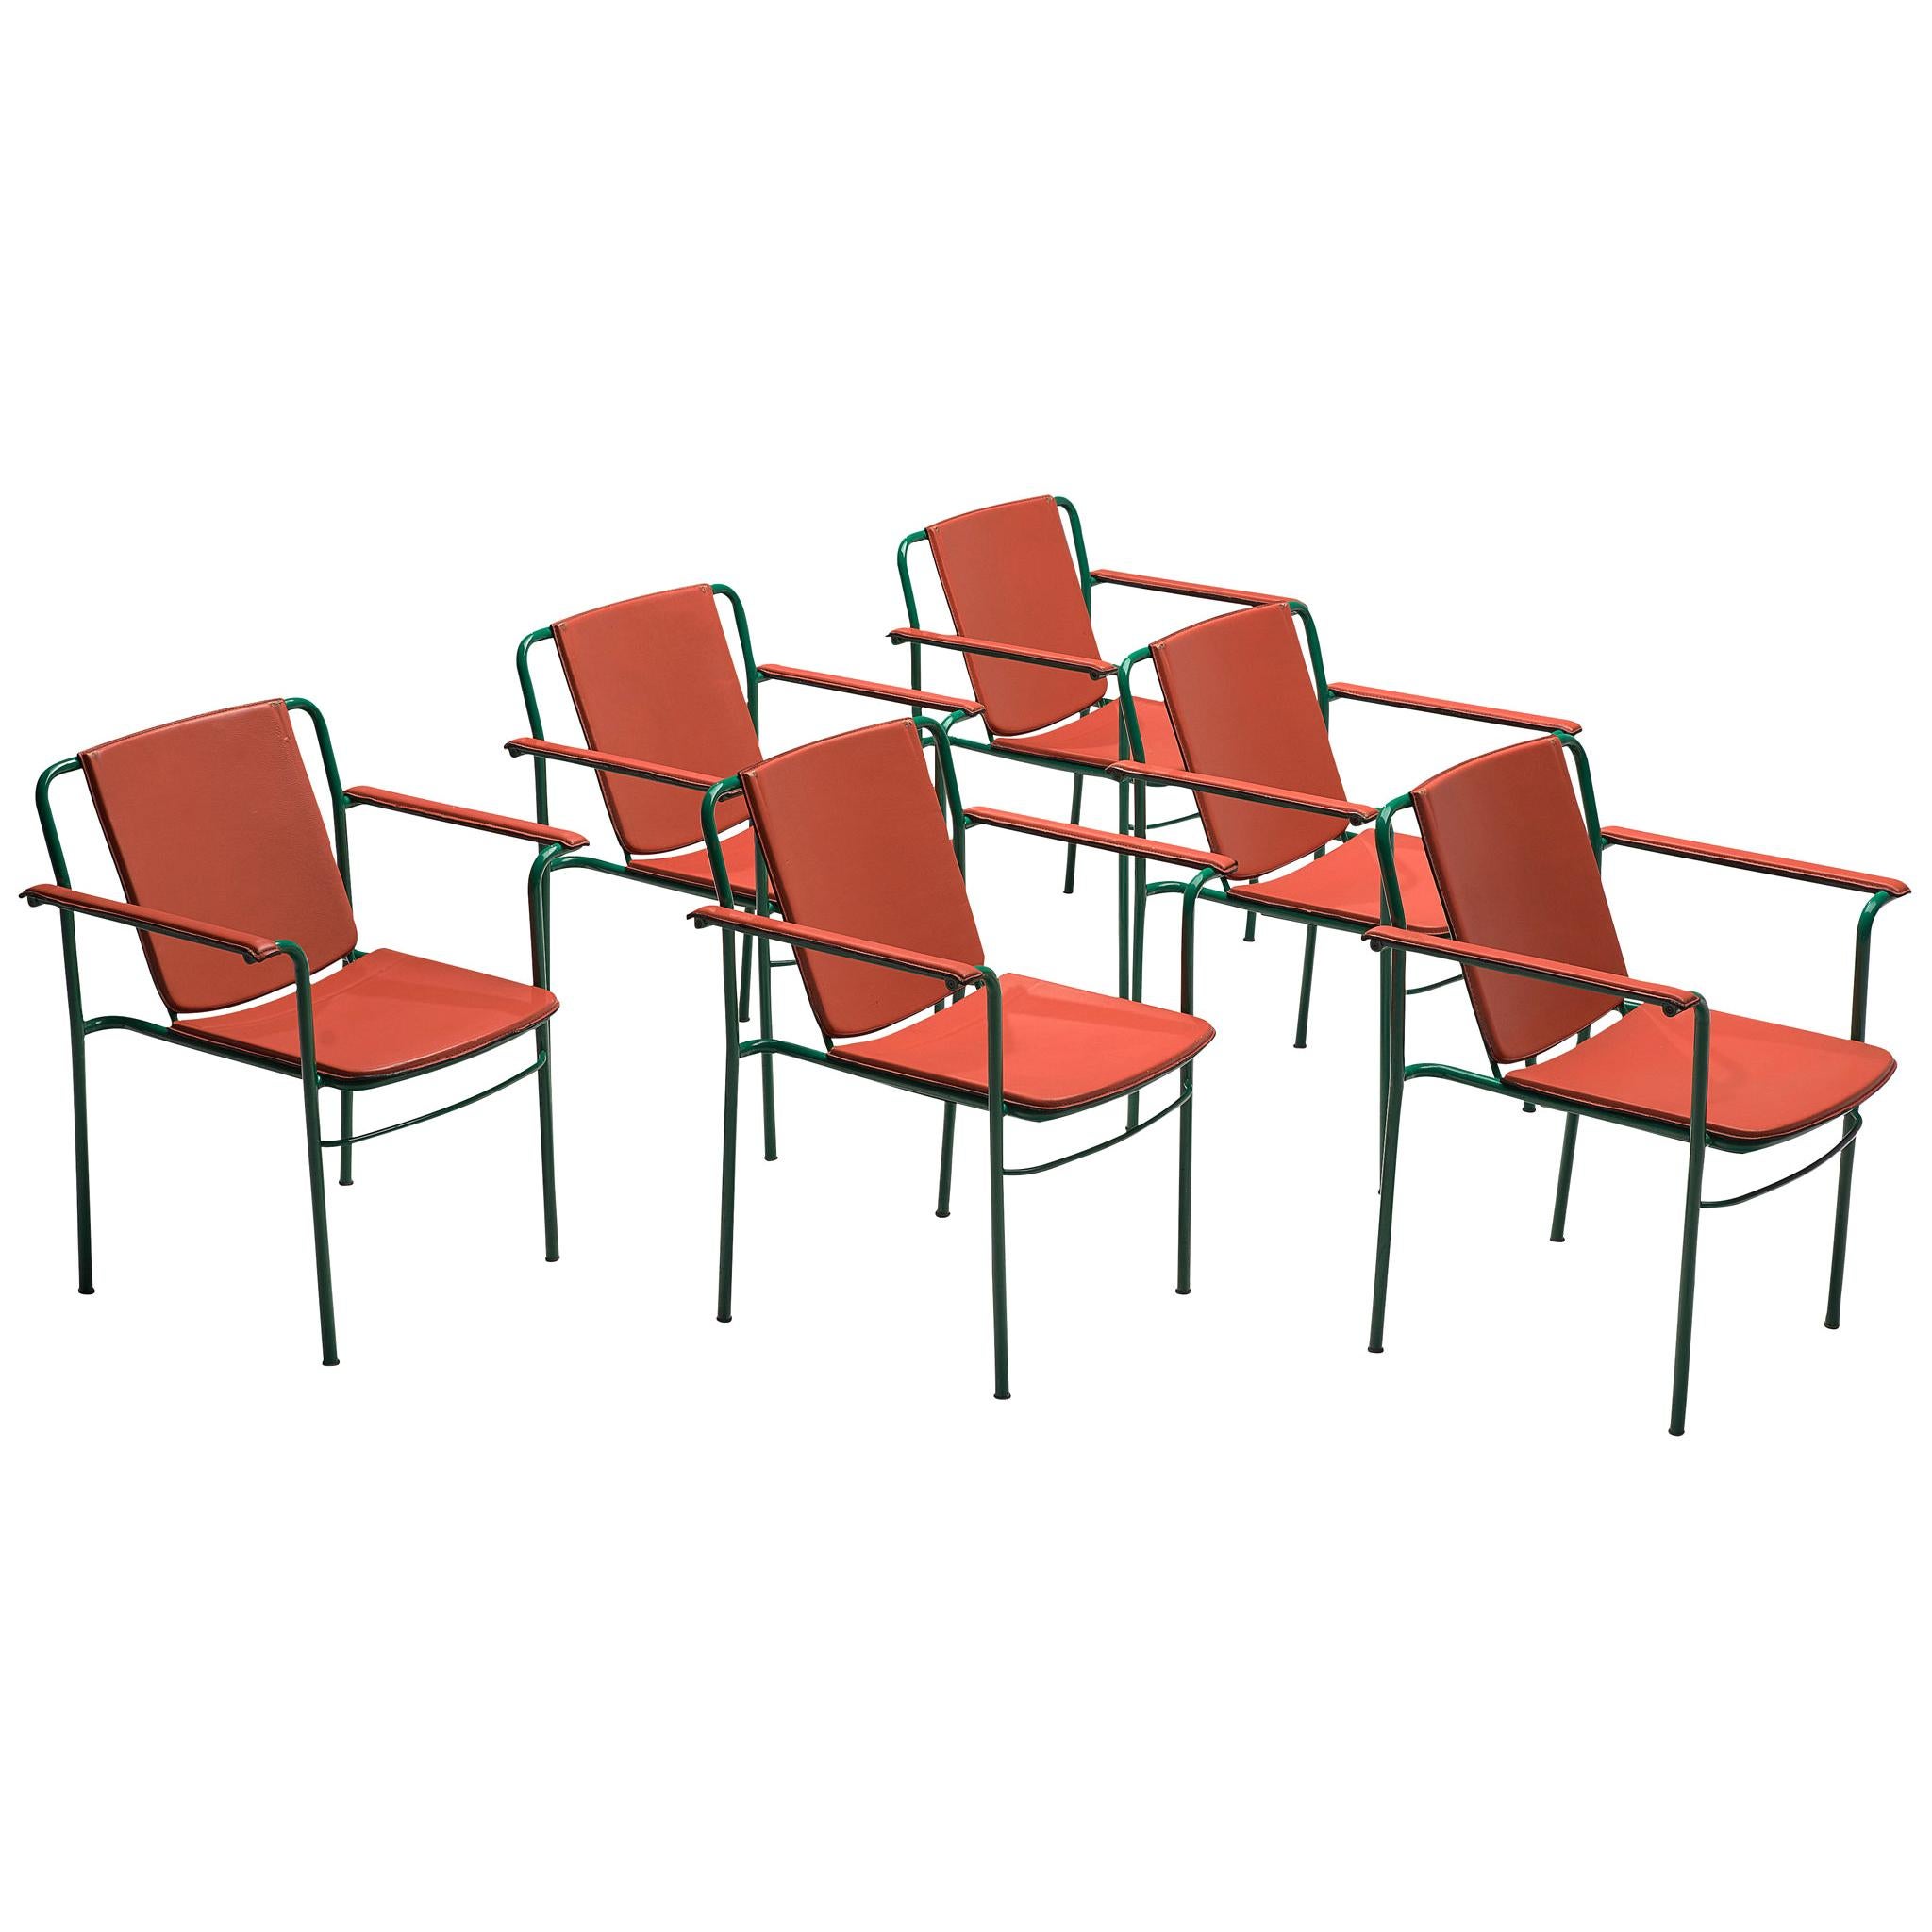 Mario Marenco Chairs